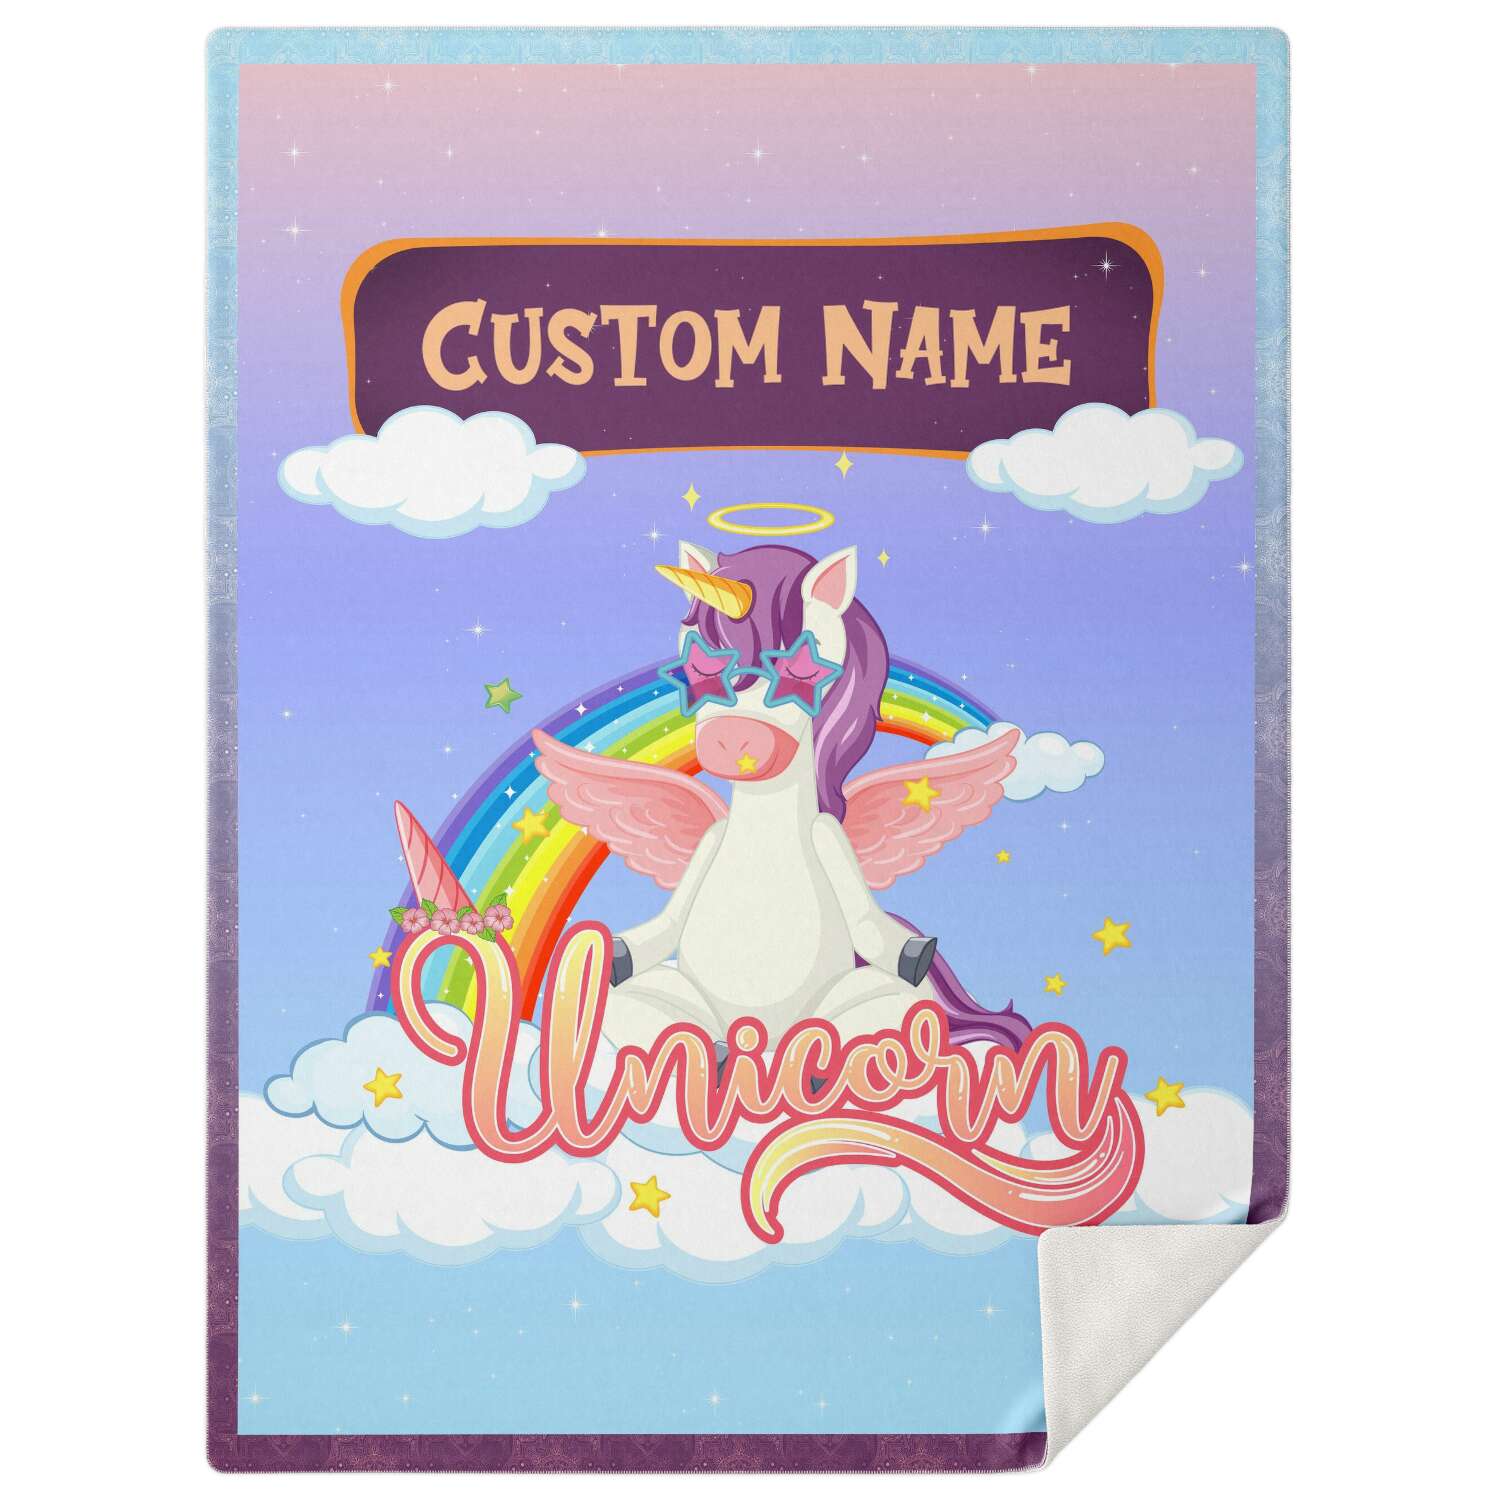 Personalized Name Unicorn Blanket for Kids, Custom Name Blanket for Boys and Girls